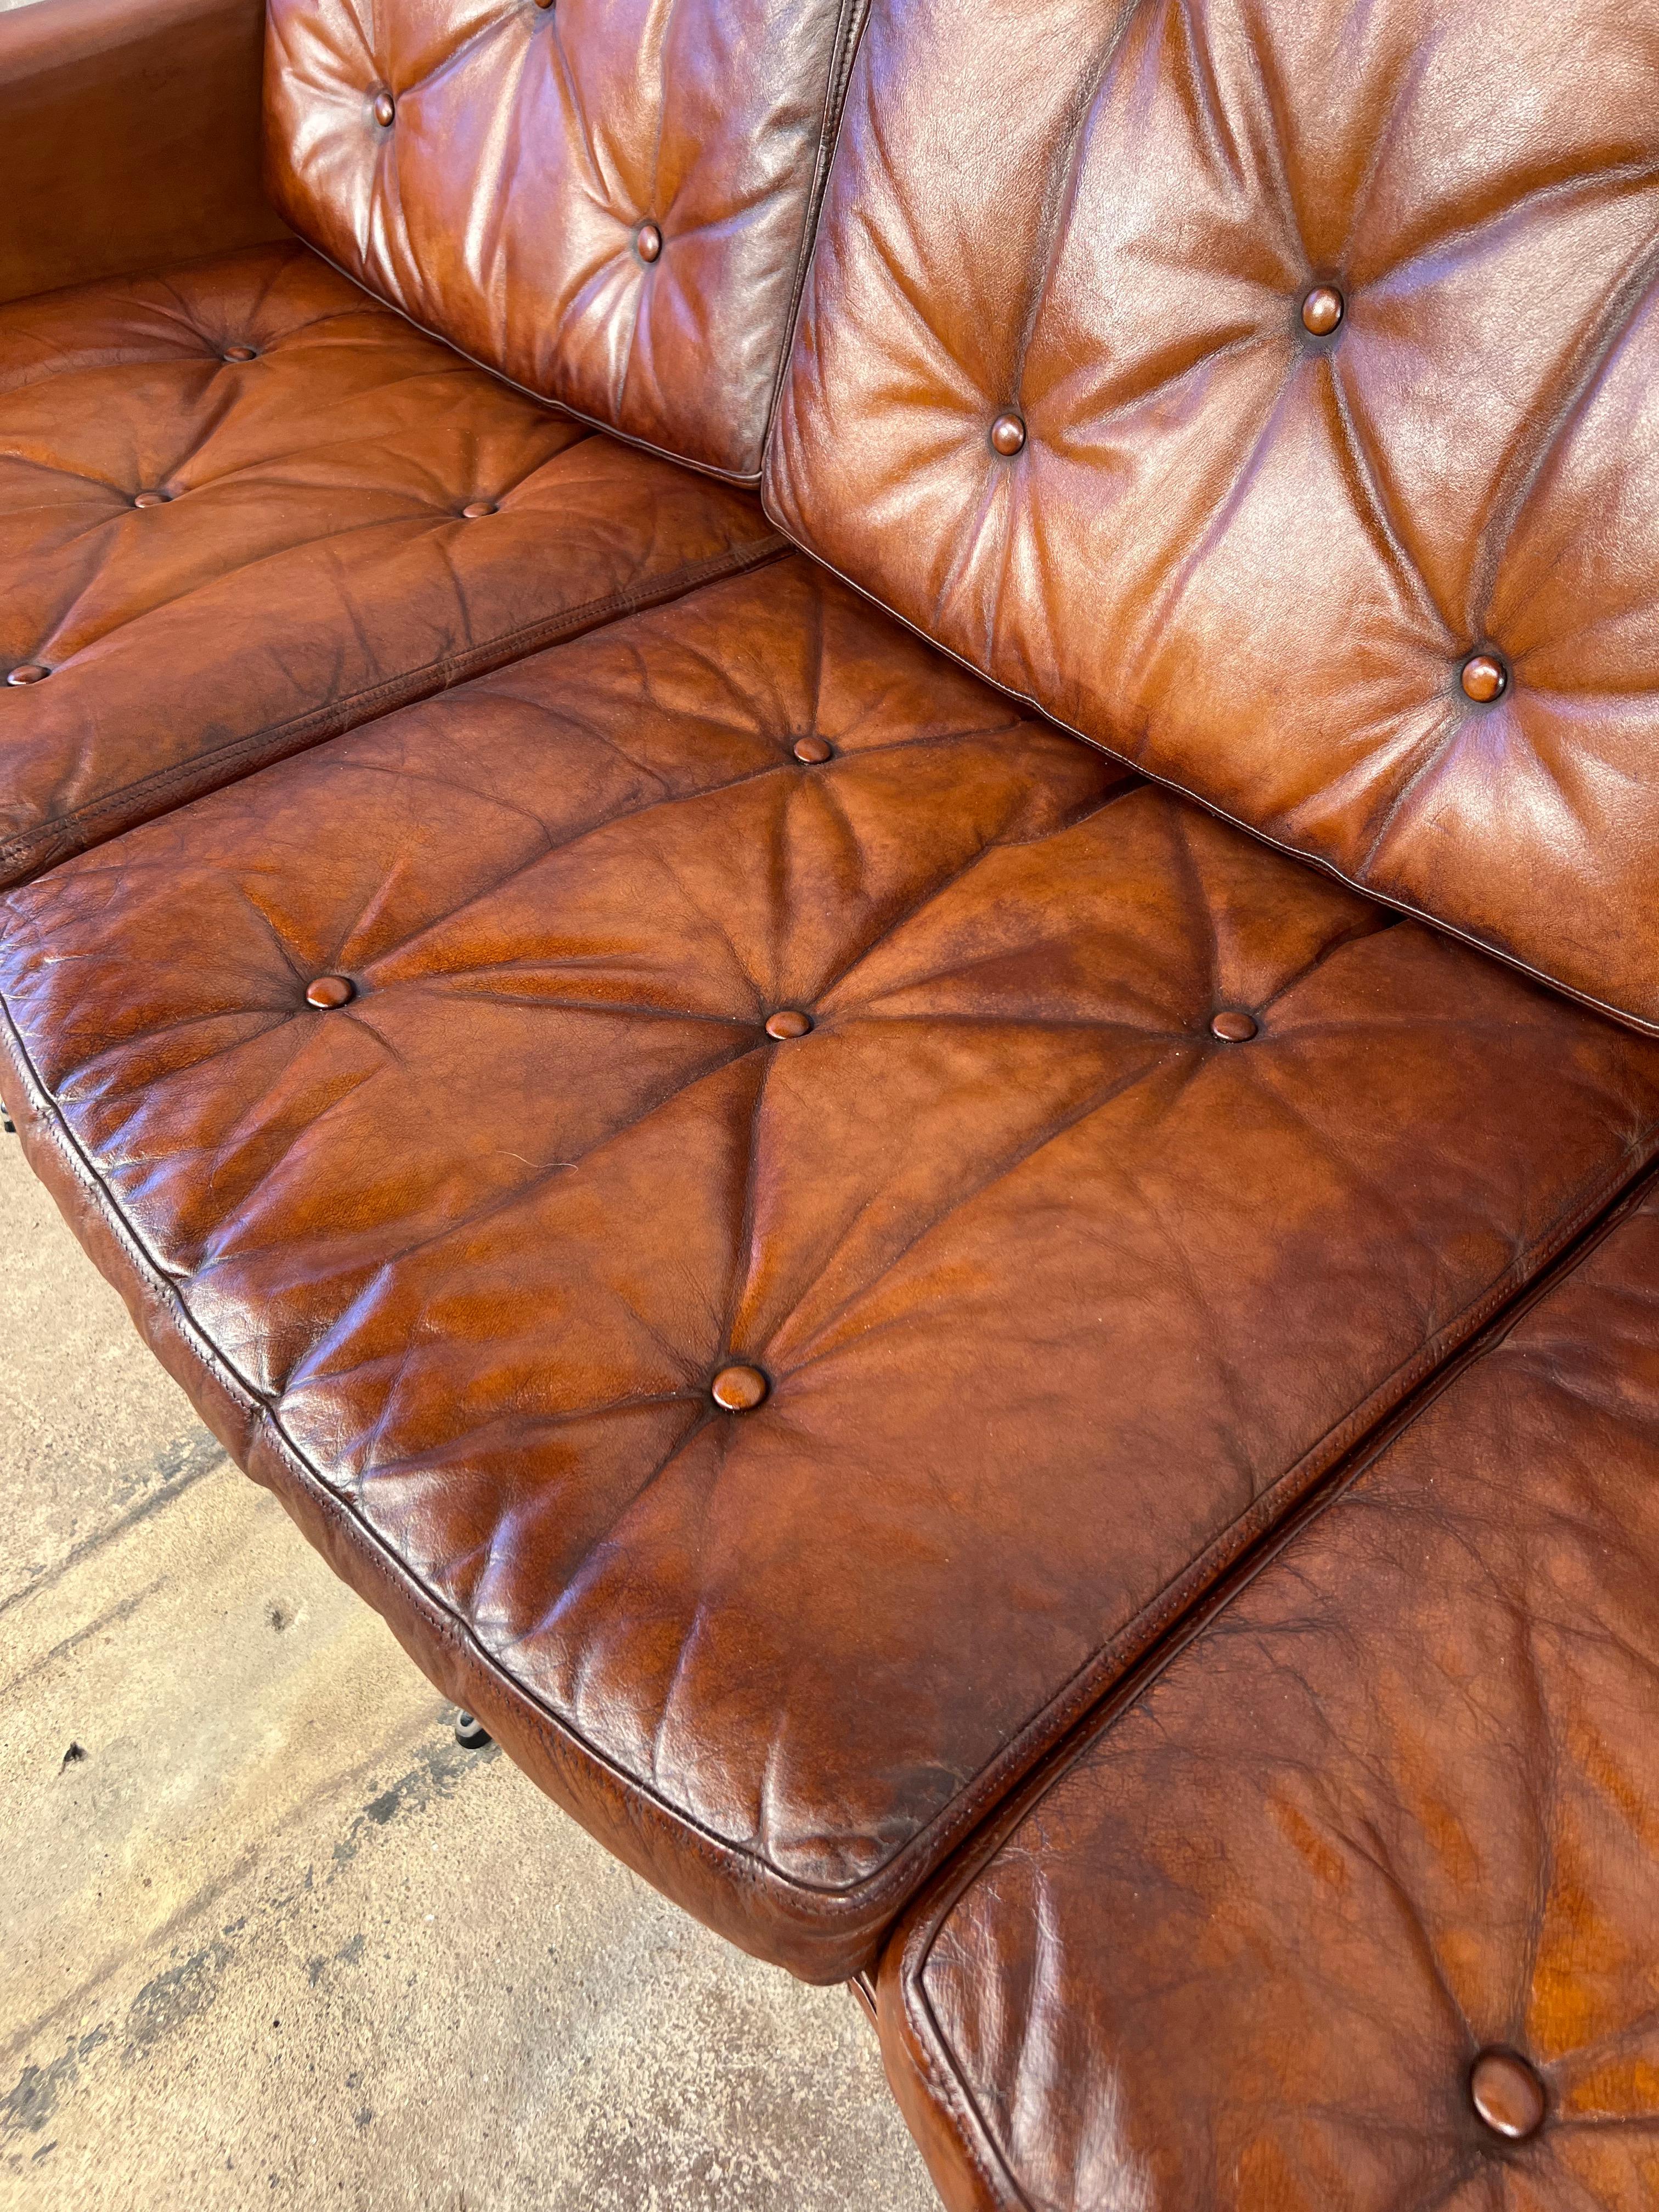 sofa knut based